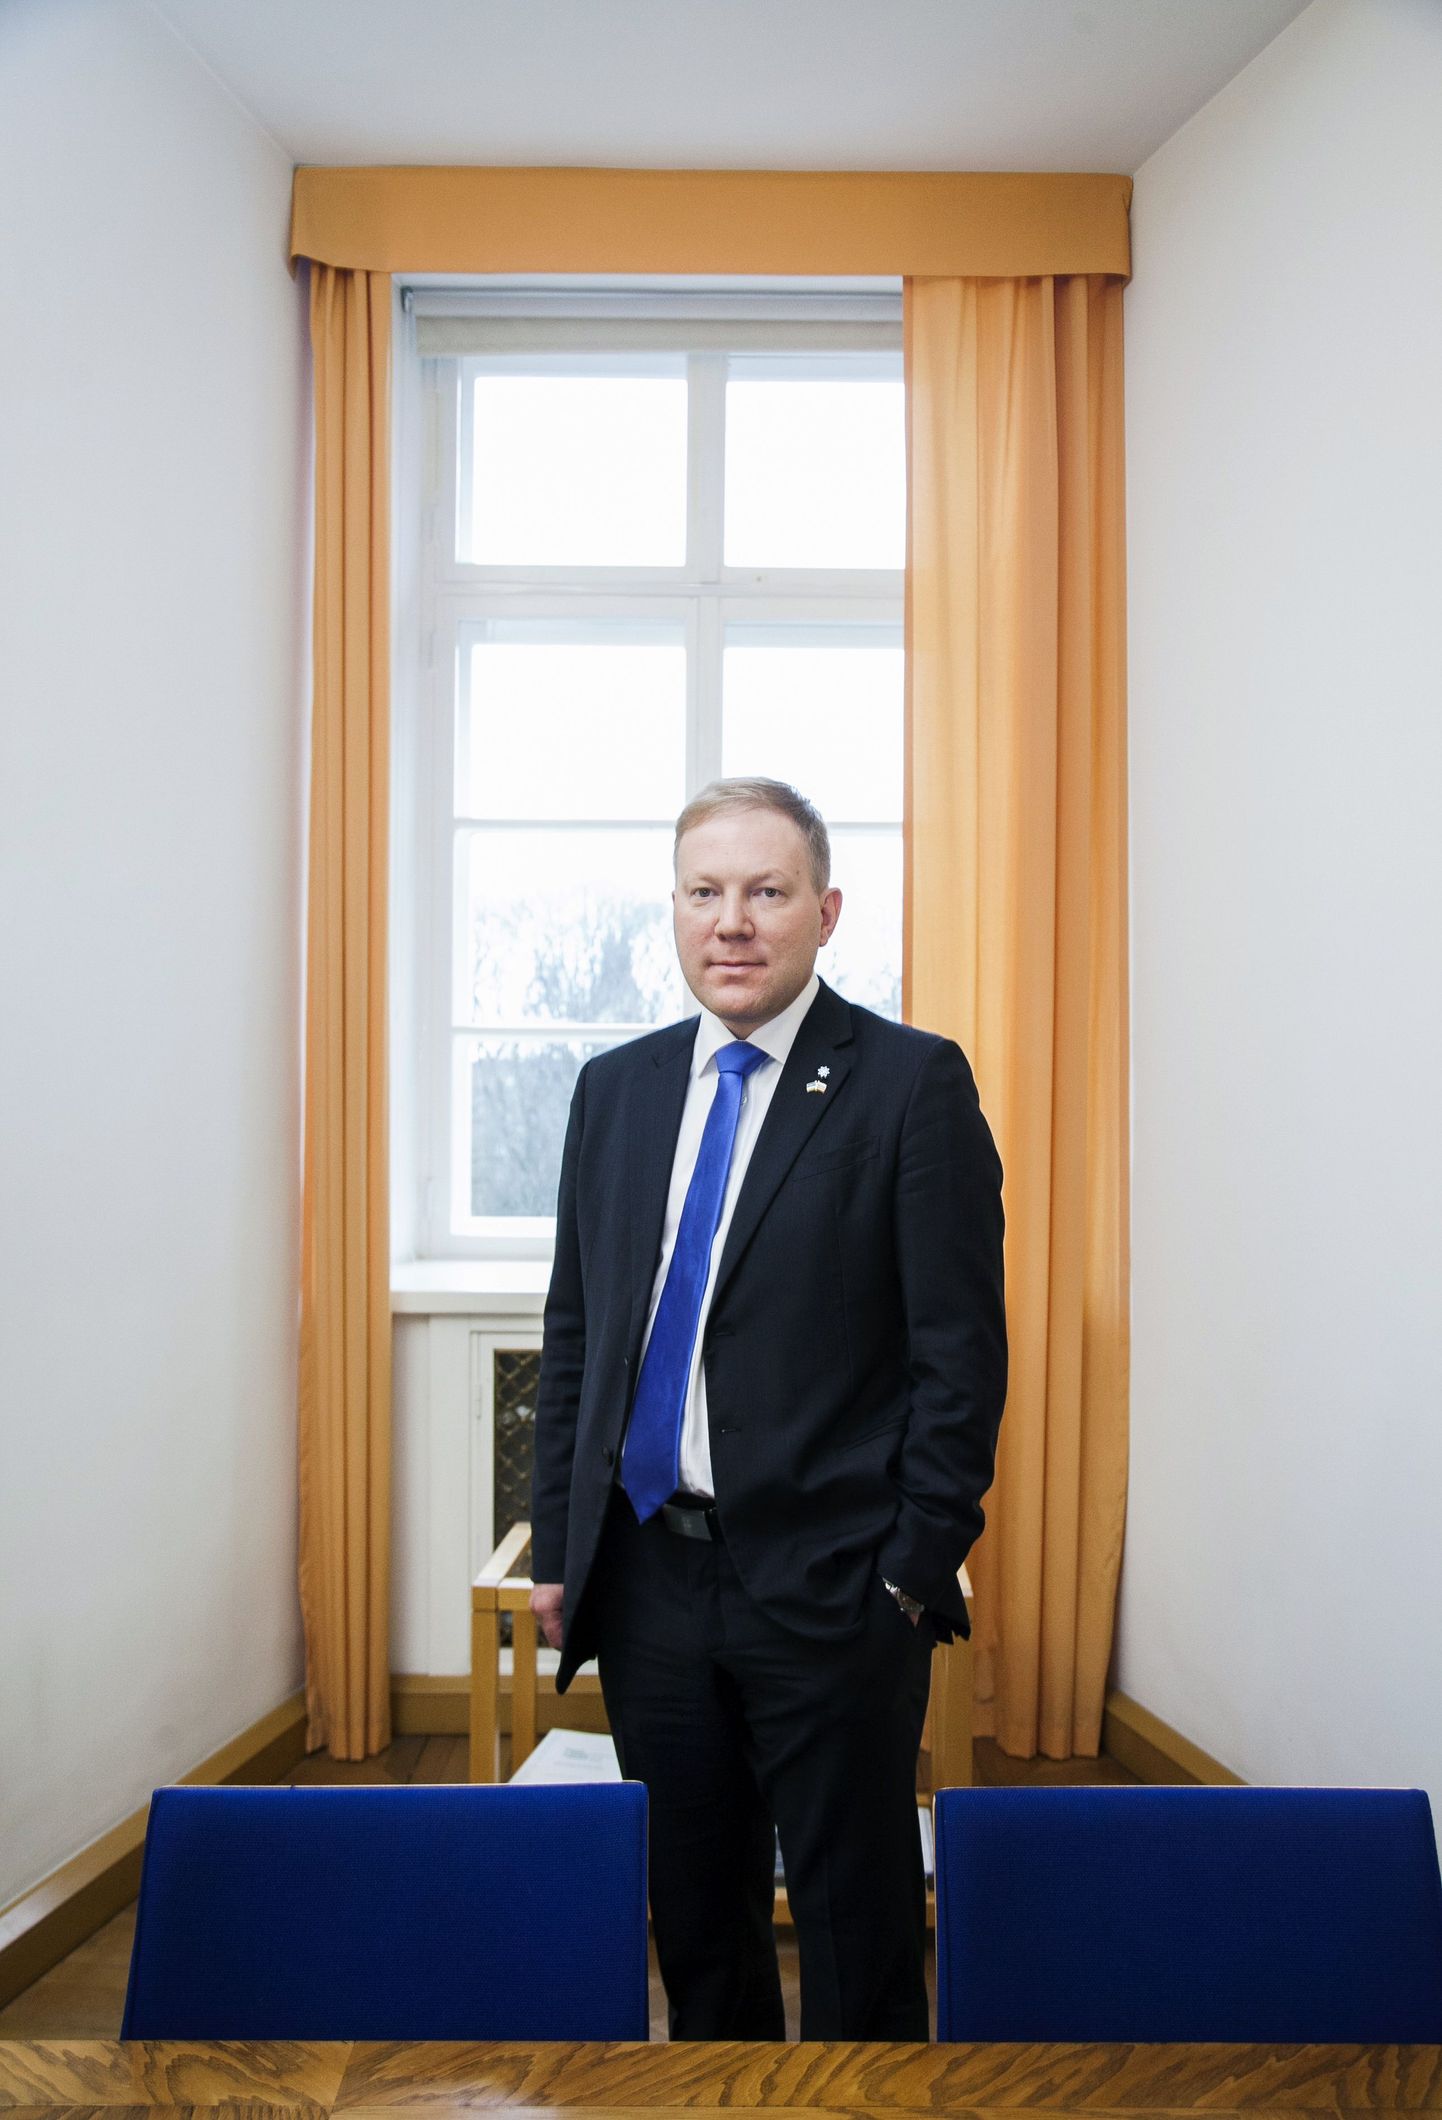 Riigikogu vliskomisjoni esimees Marko Mihkelson.